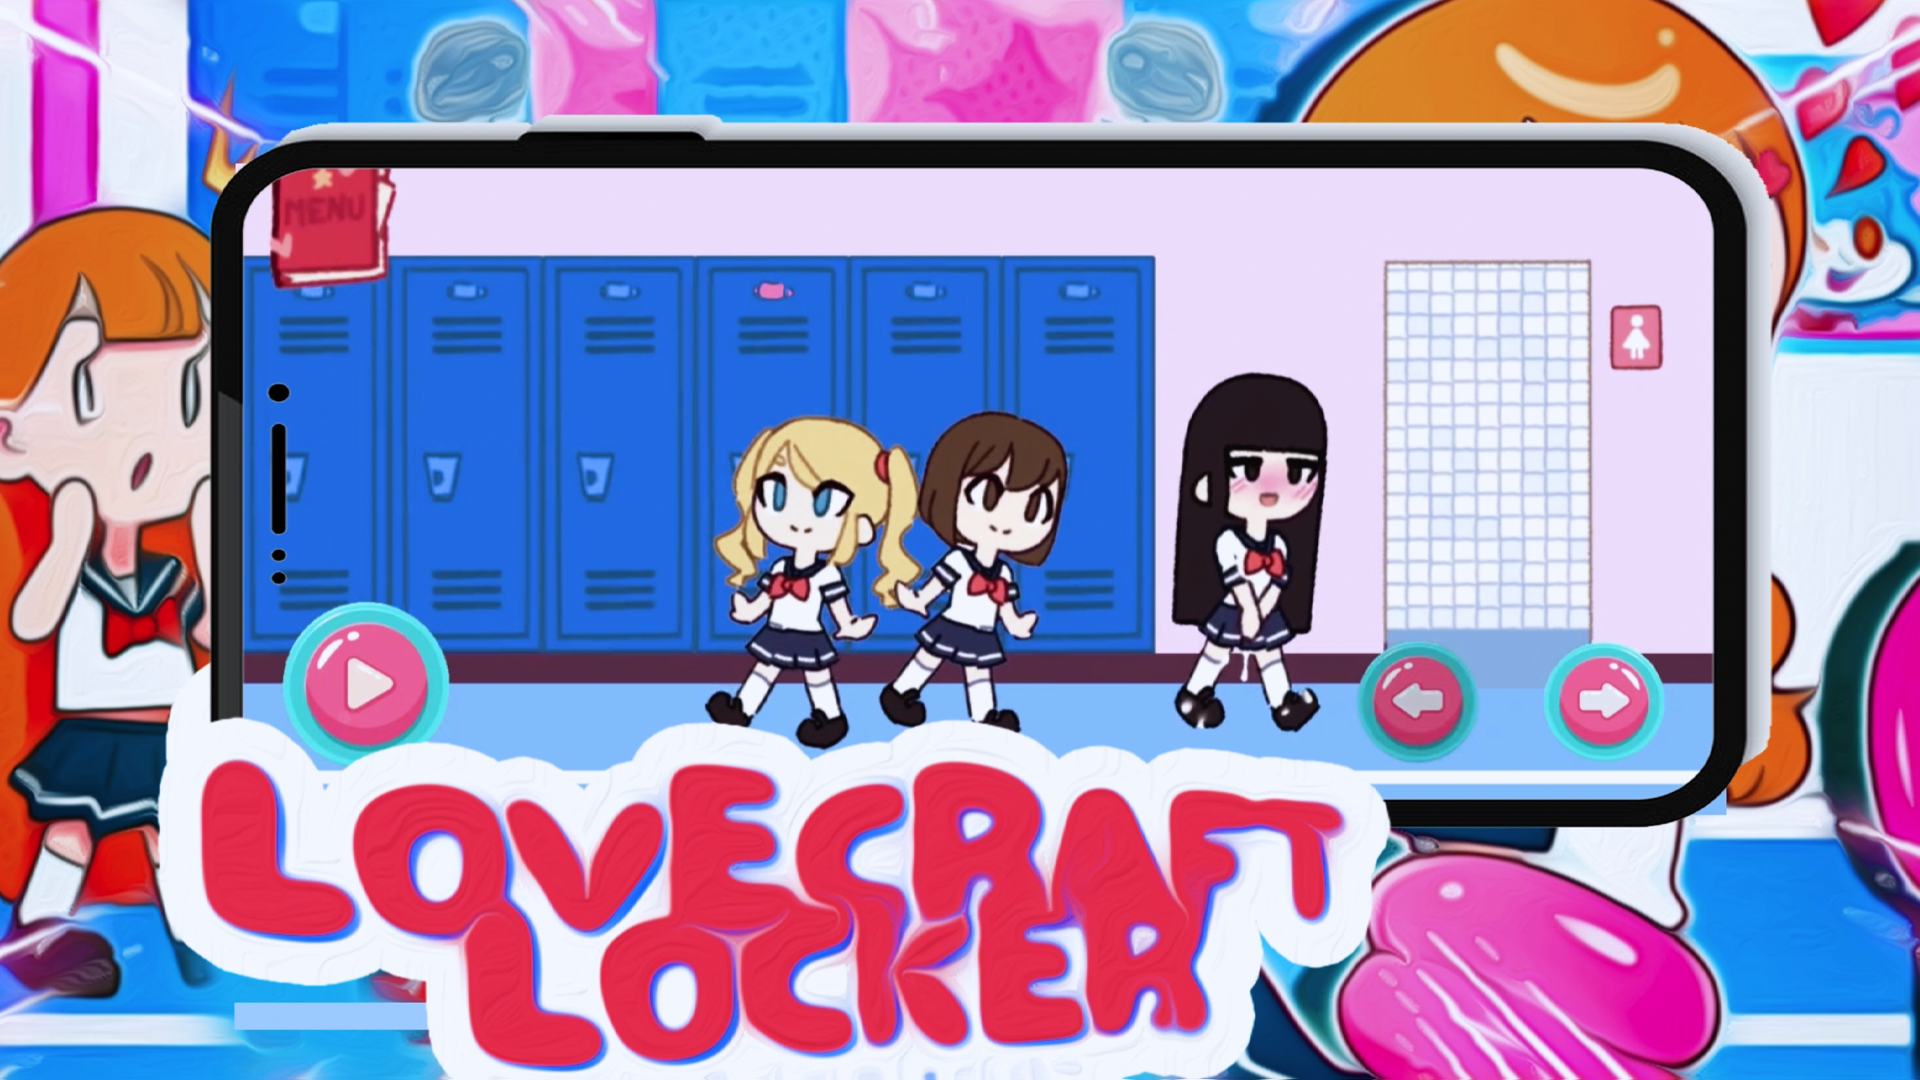 Screenshot 1 of LoveCraft Locker-Spiel 